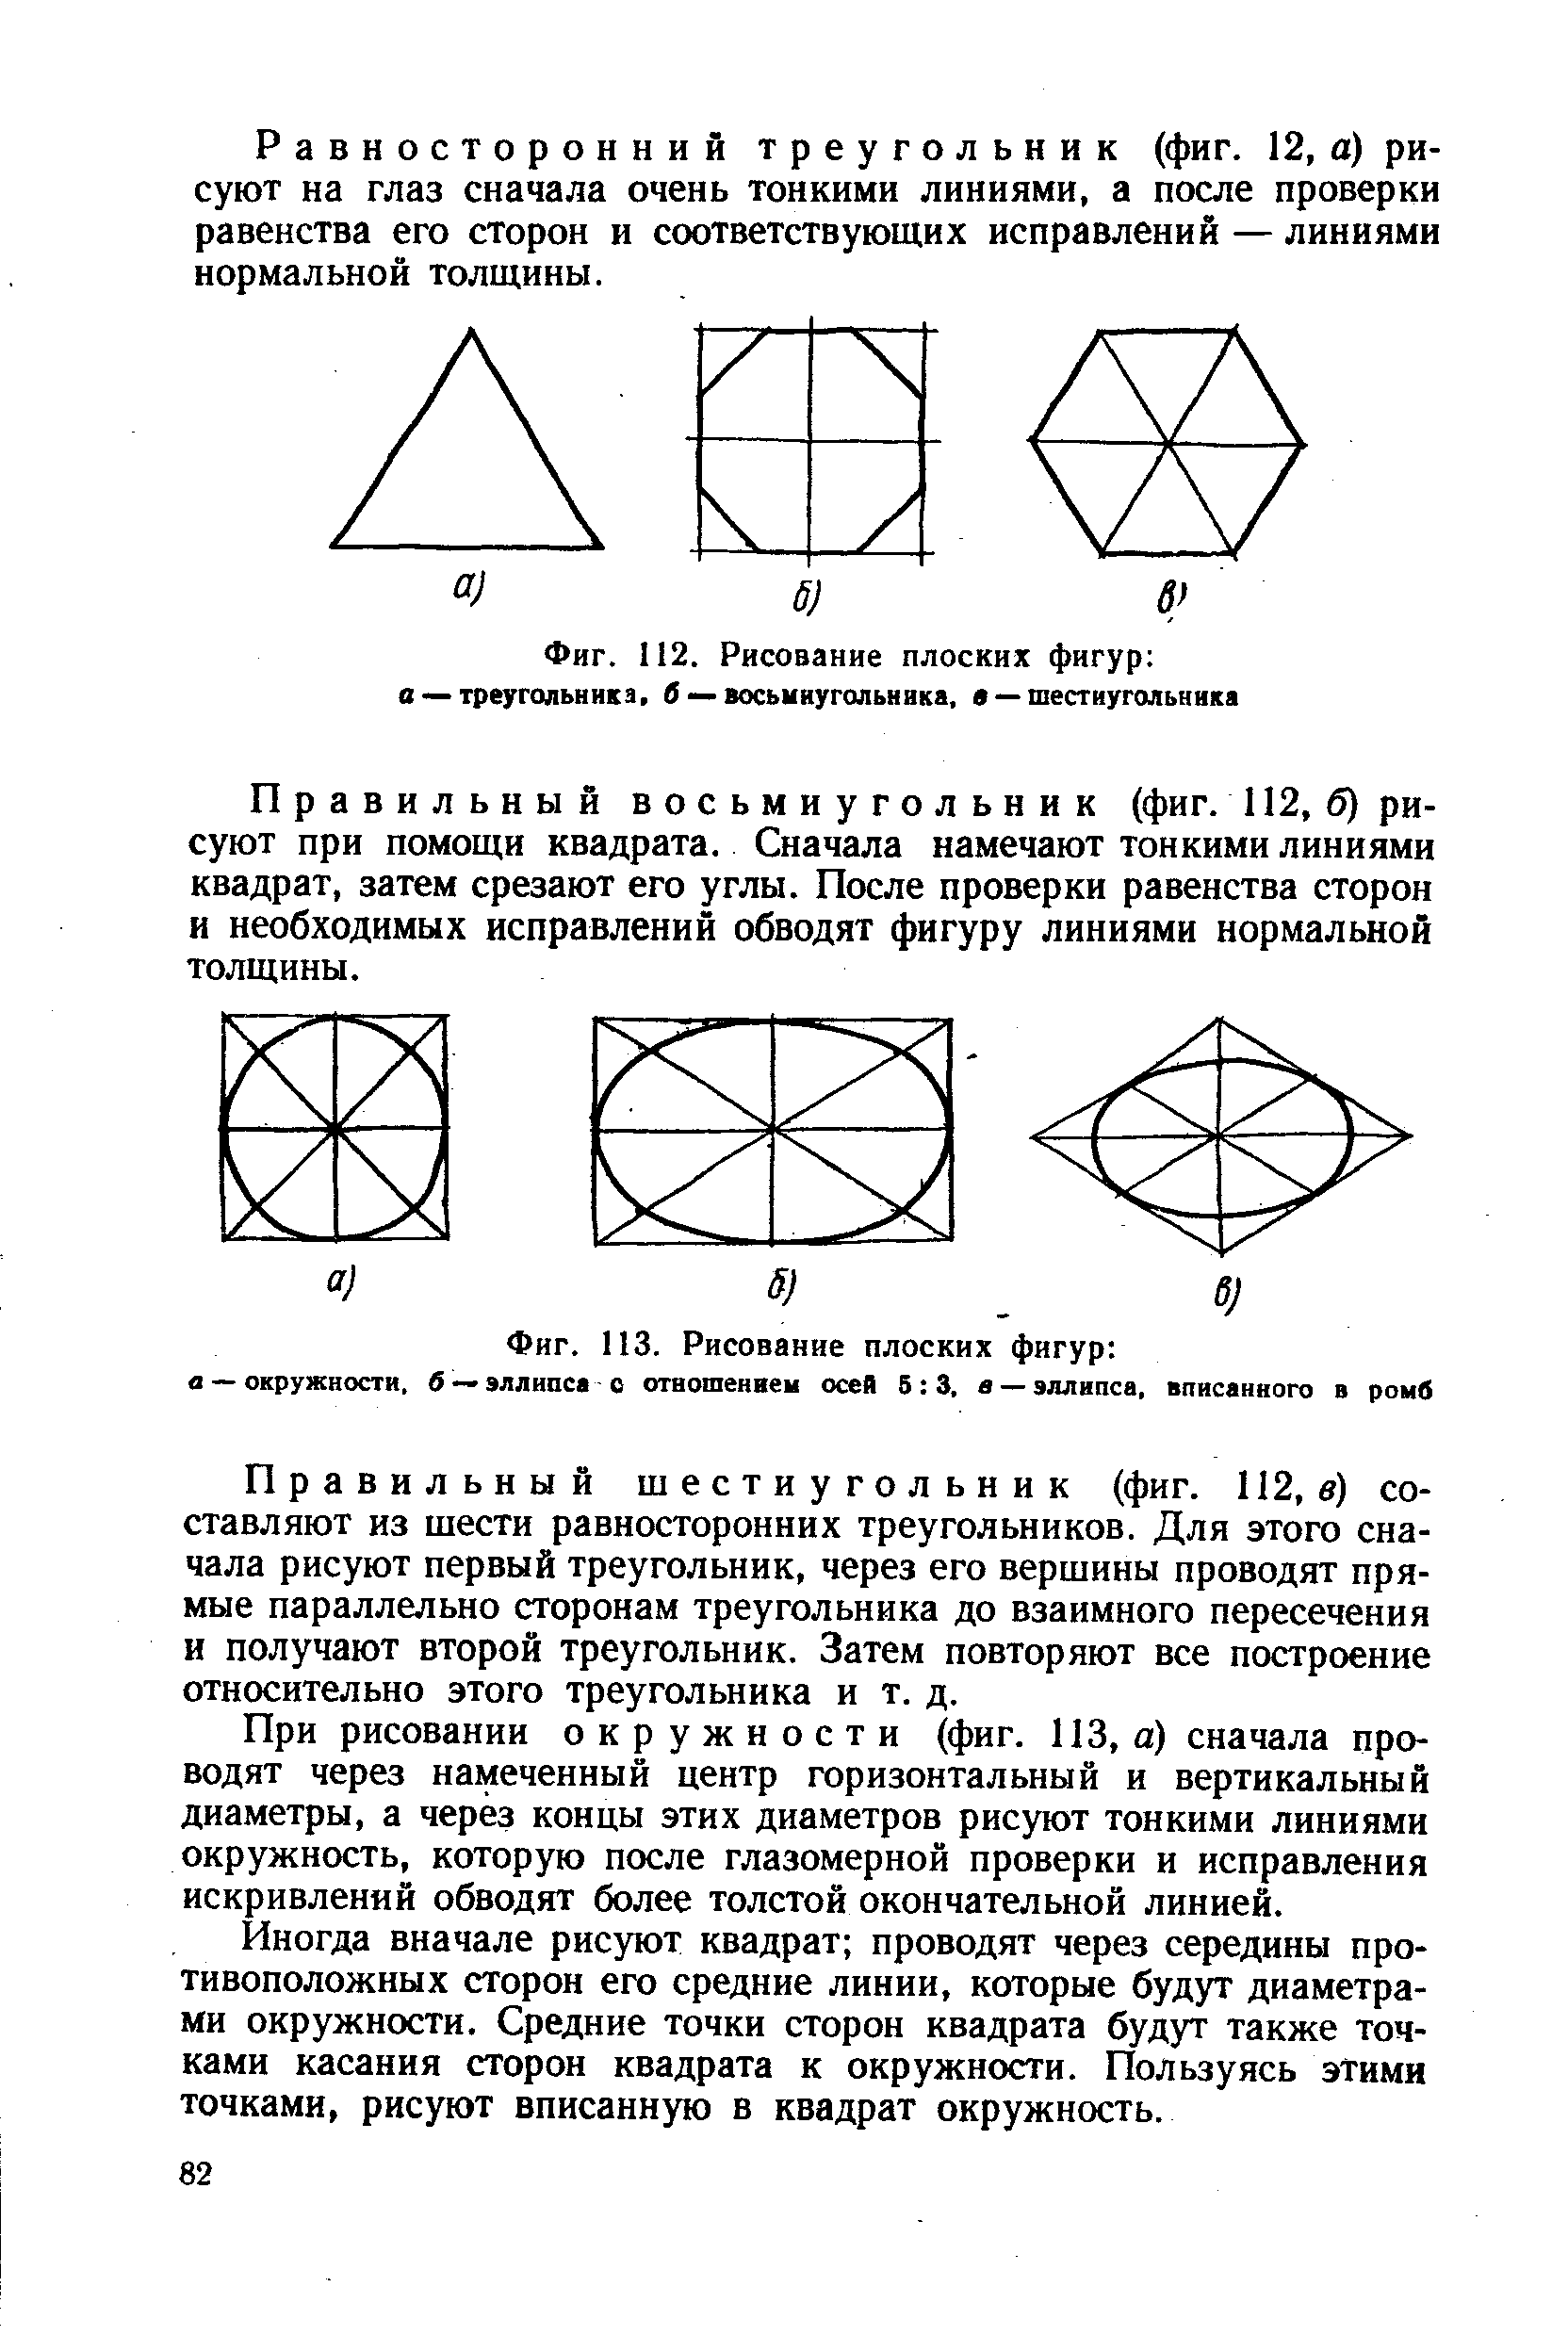 Фиг. 112. Рисование плоских фигур а — треугольника, б — восьмиугольника, в — шестиугольника
